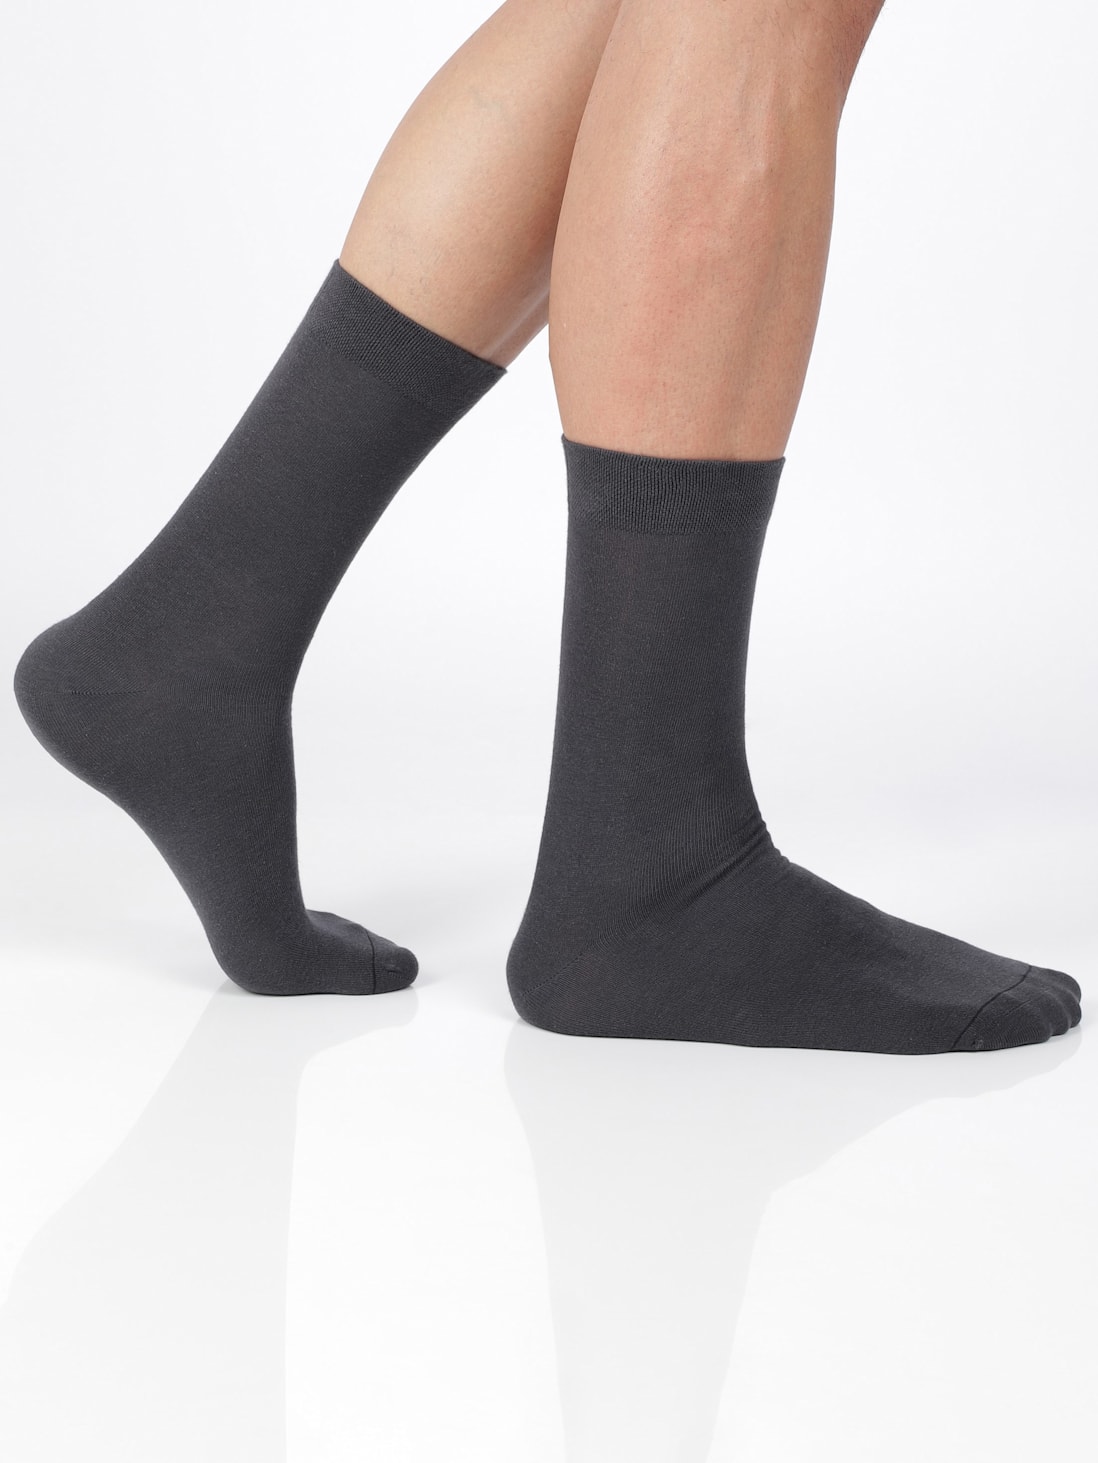 Men's Modal Luxury Dress Socks Soft and Comfortable 